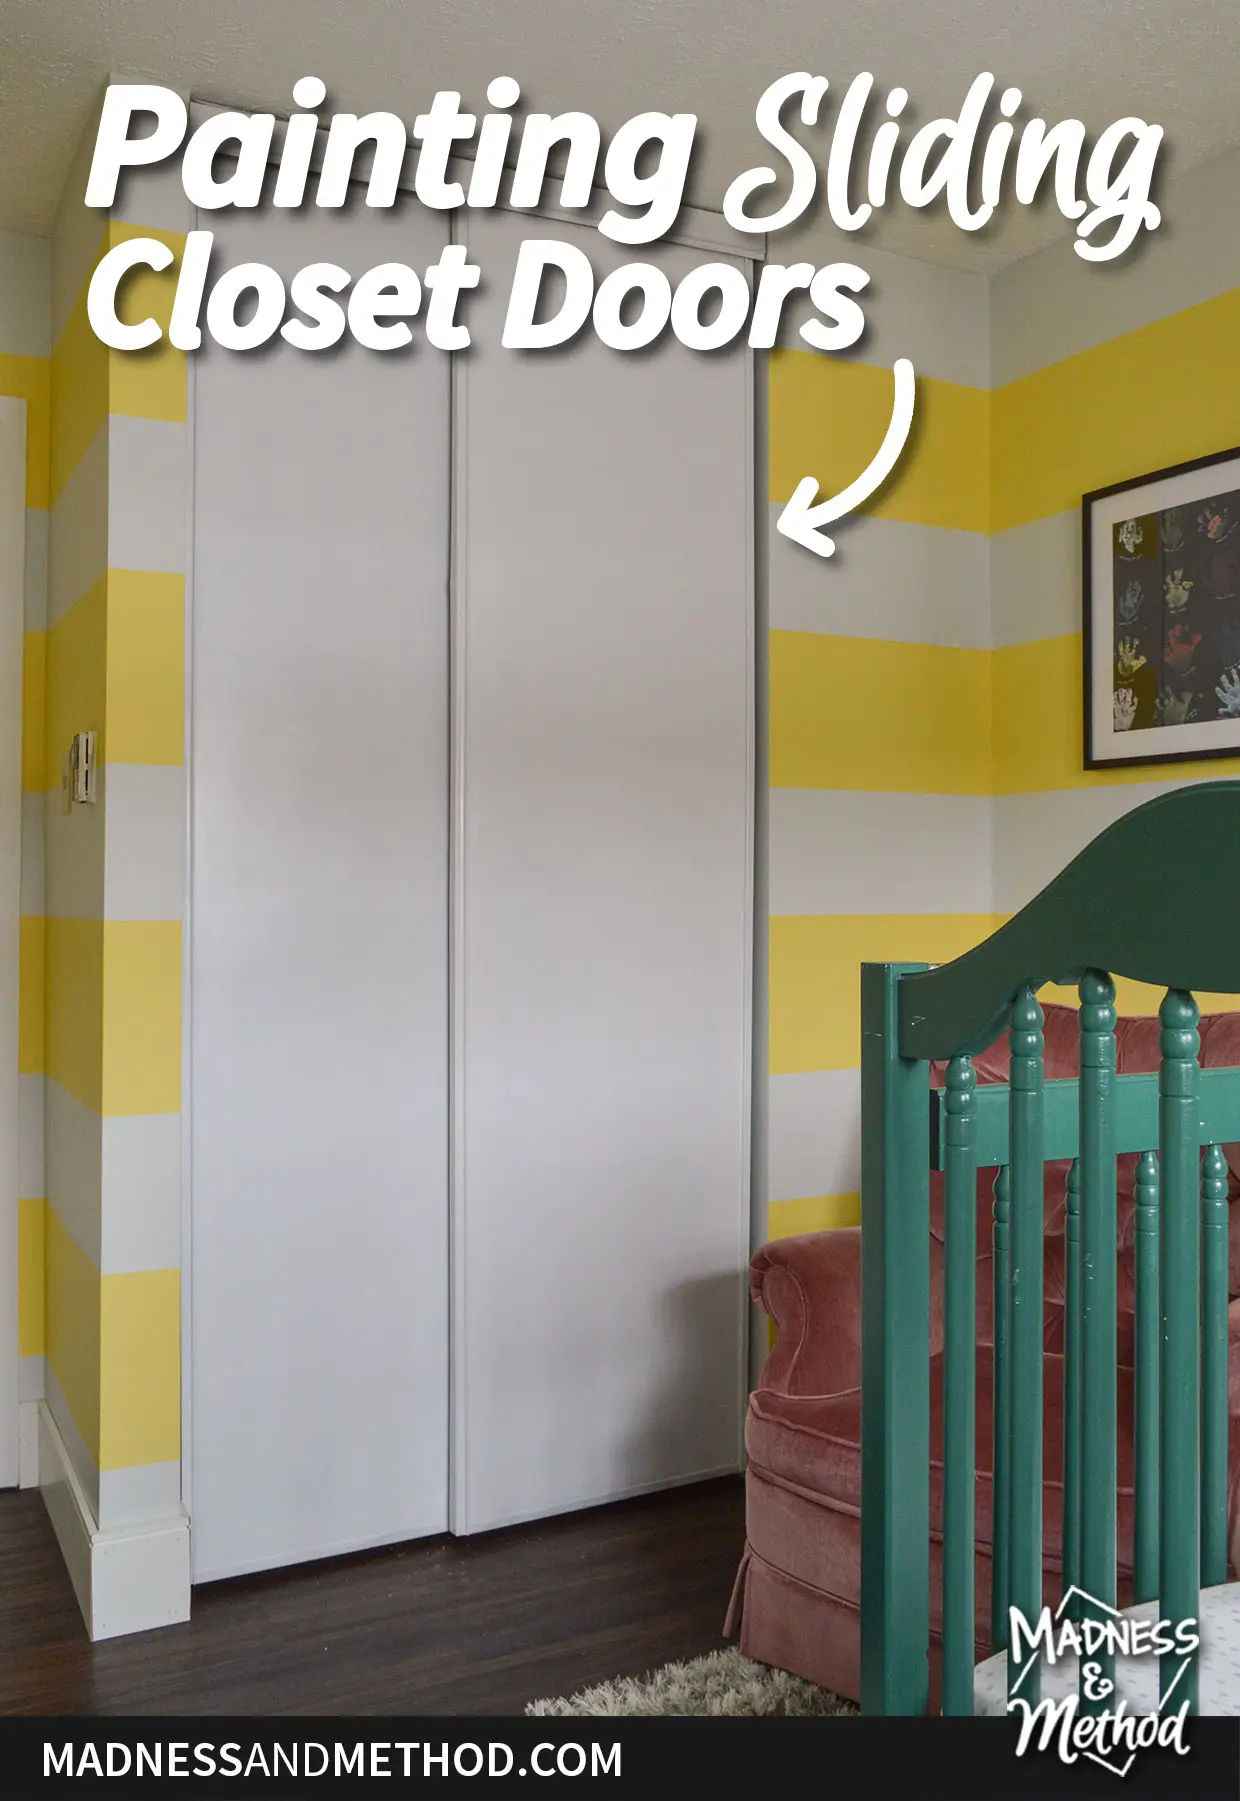 painting sliding closet doors text overlay with white doors